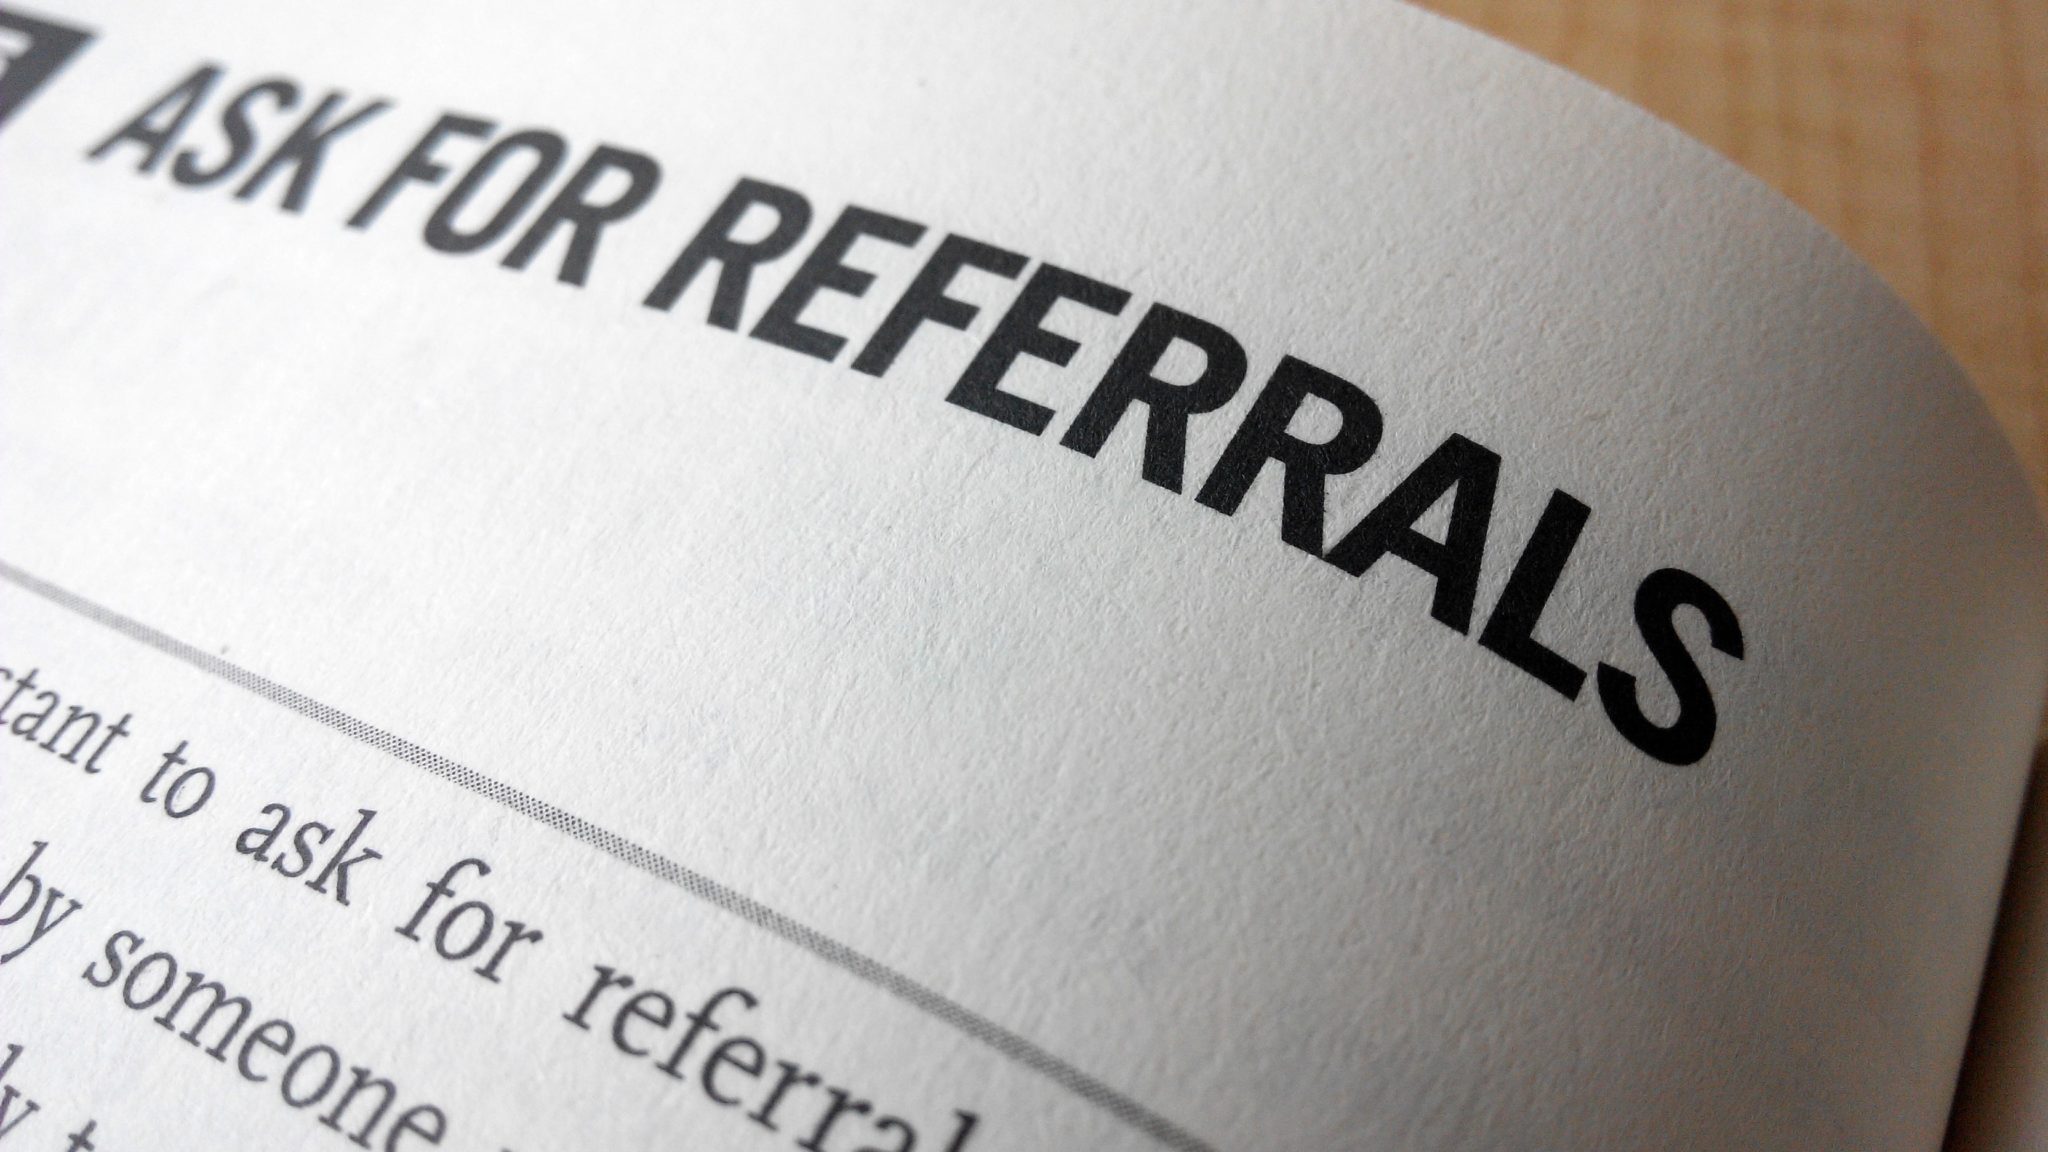 Generating referrals